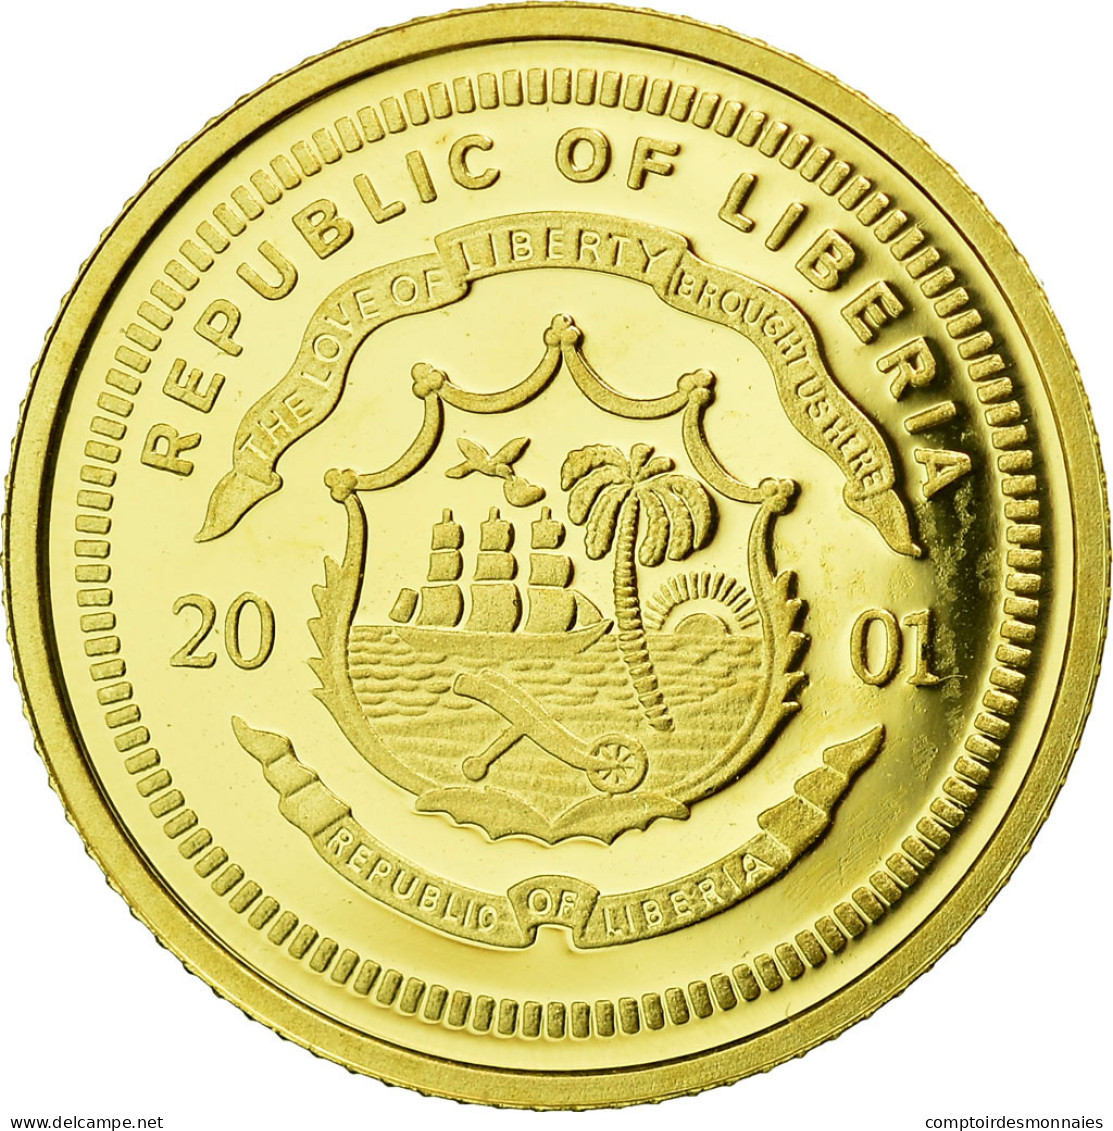 Monnaie, Liberia, Galileo Galilei, 25 Dollars, 2001, FDC, Or - Liberia